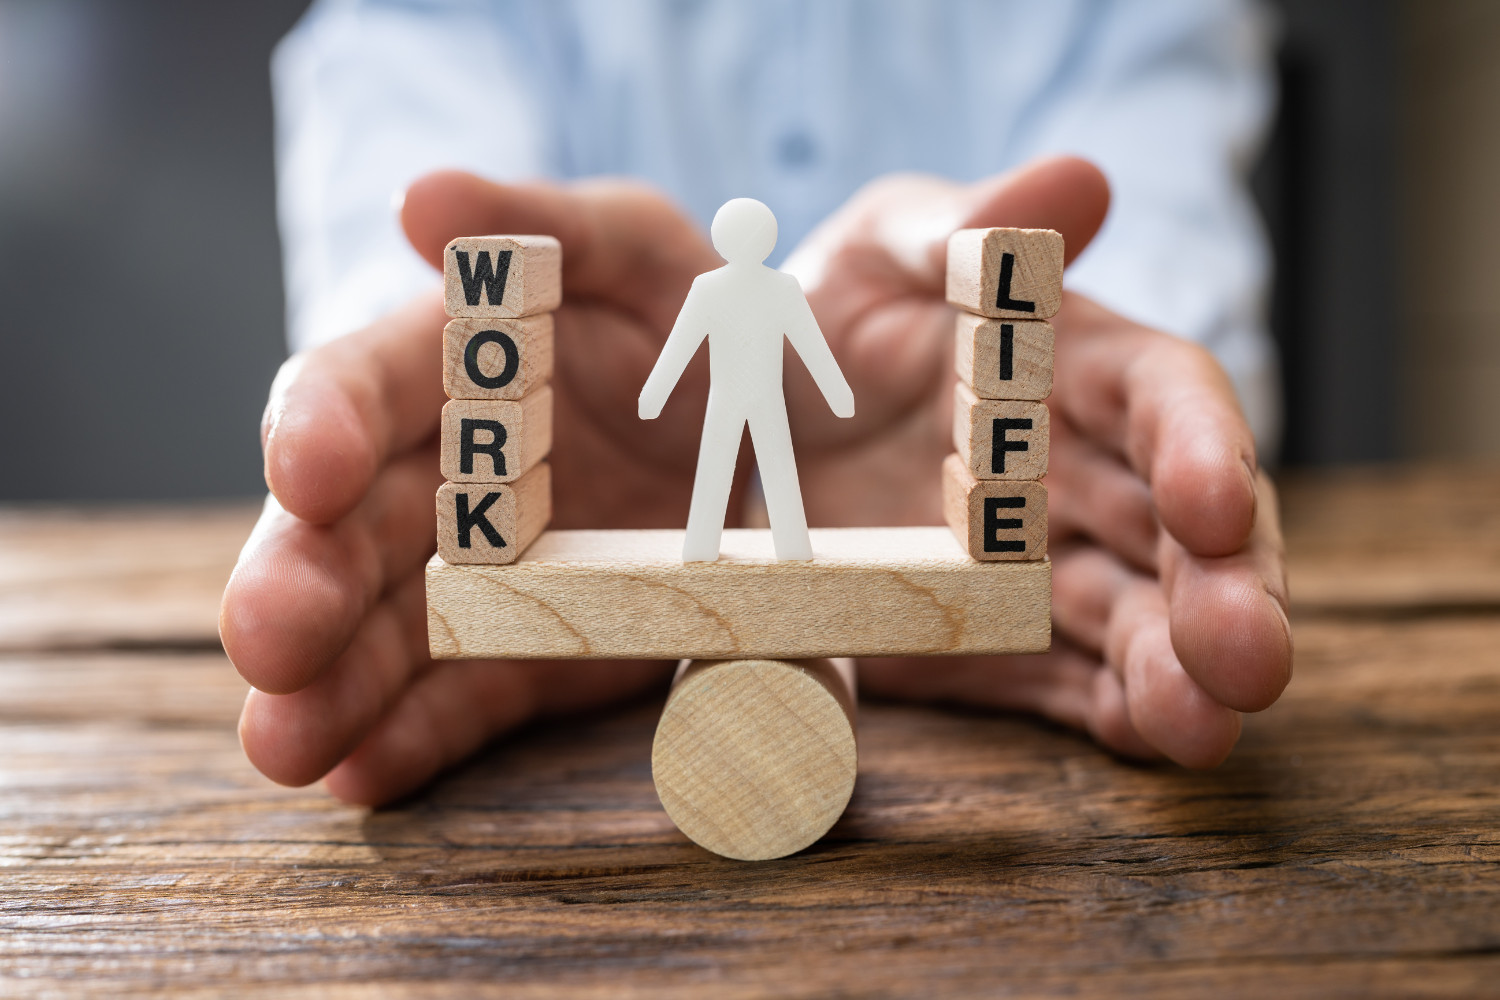 work-life balance | AVirtual